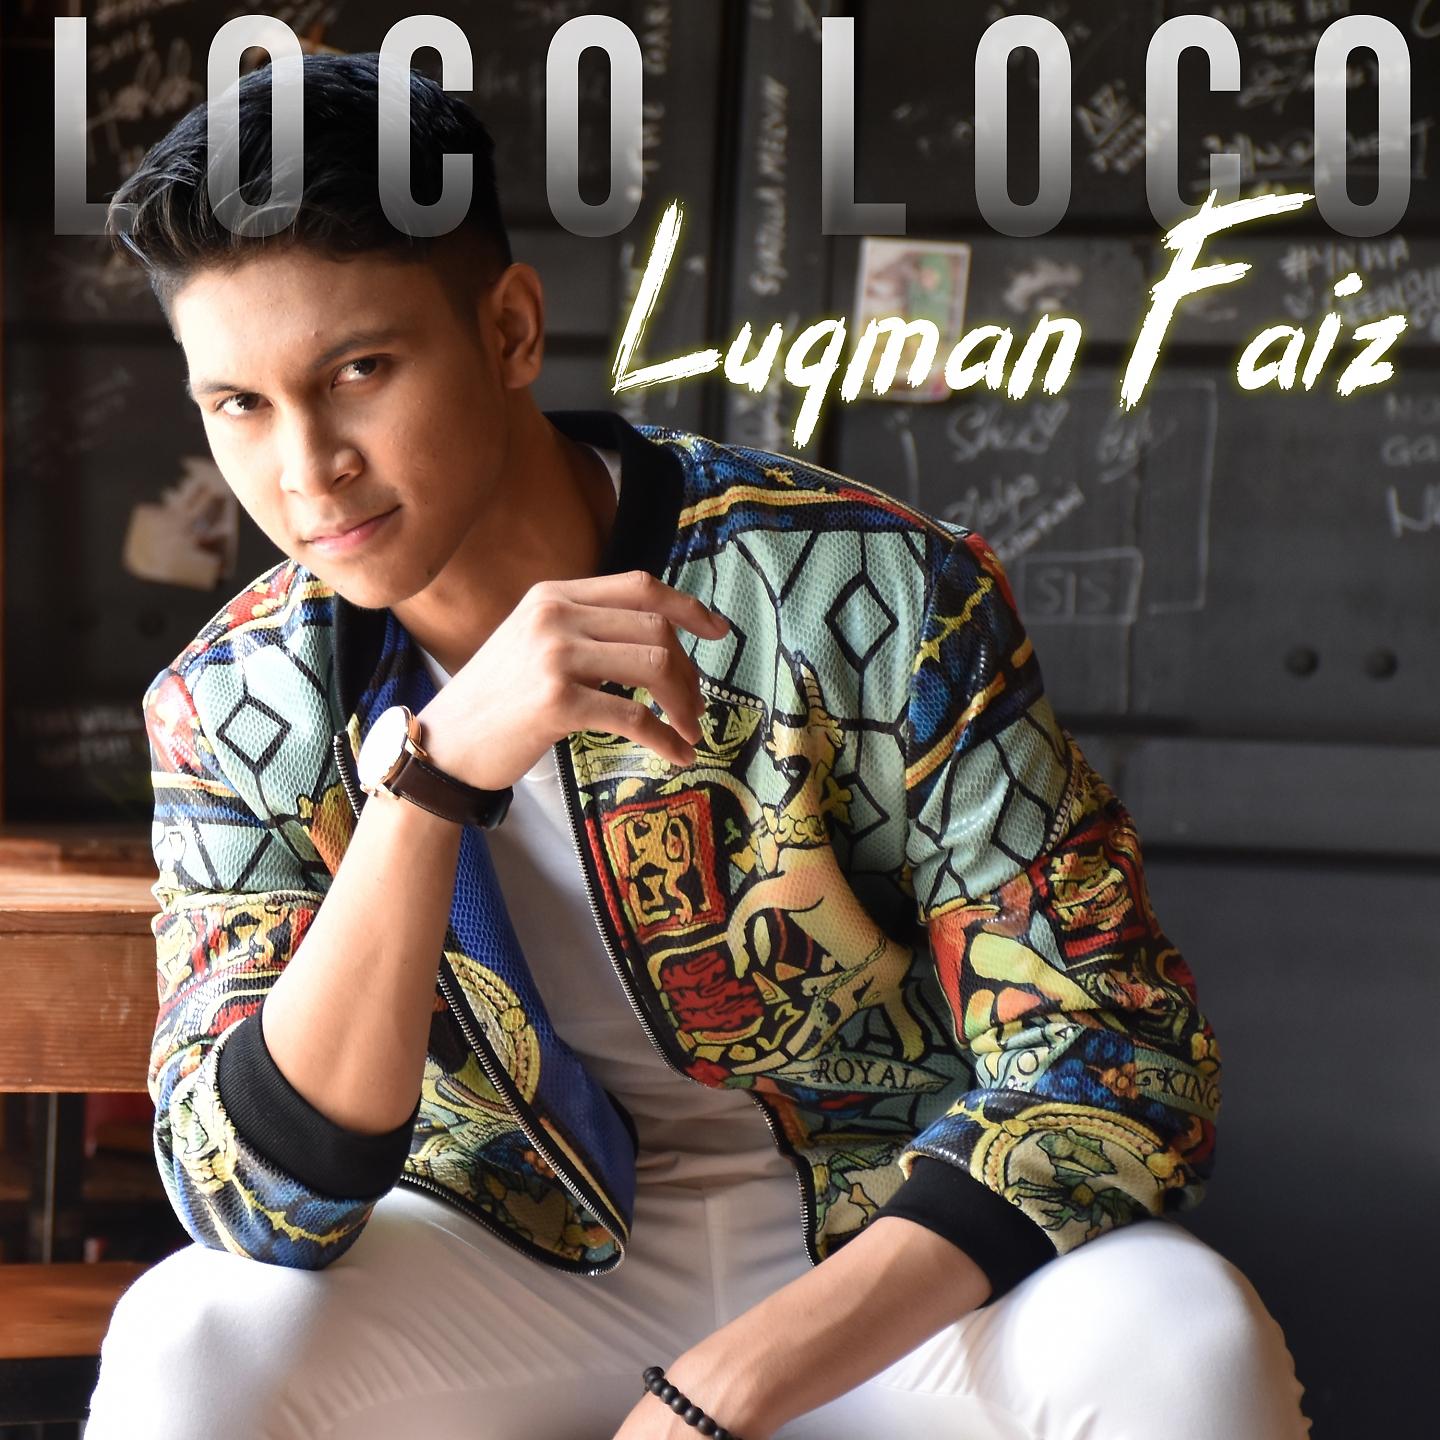 Постер альбома Loco Loco